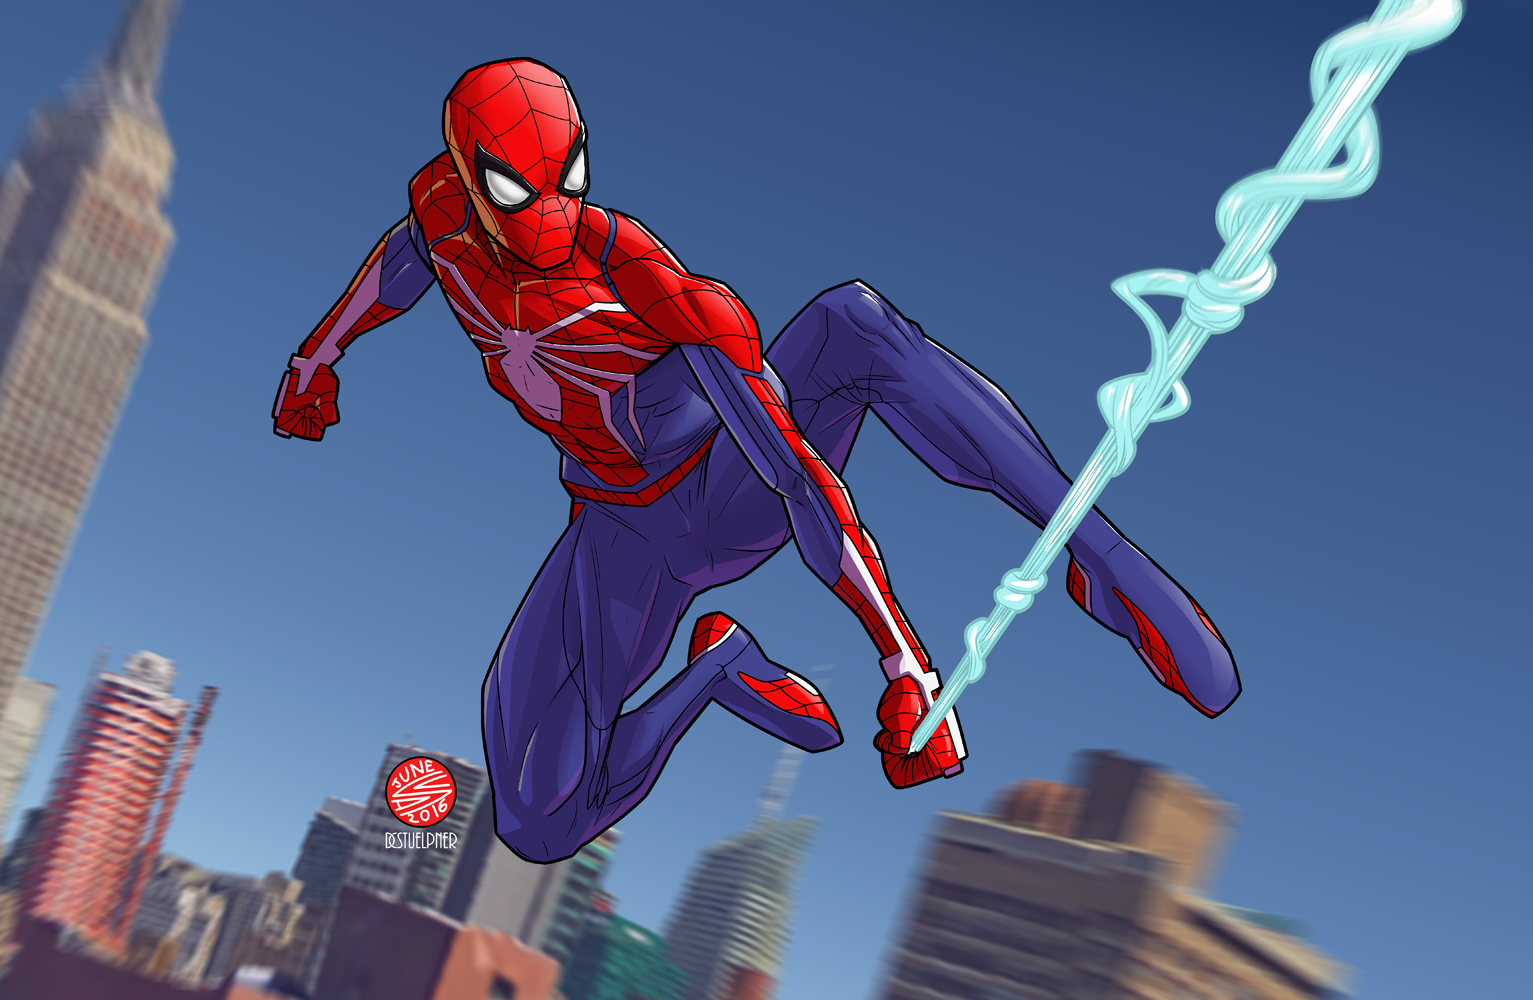 MARVEL Spider-Man Unlimited